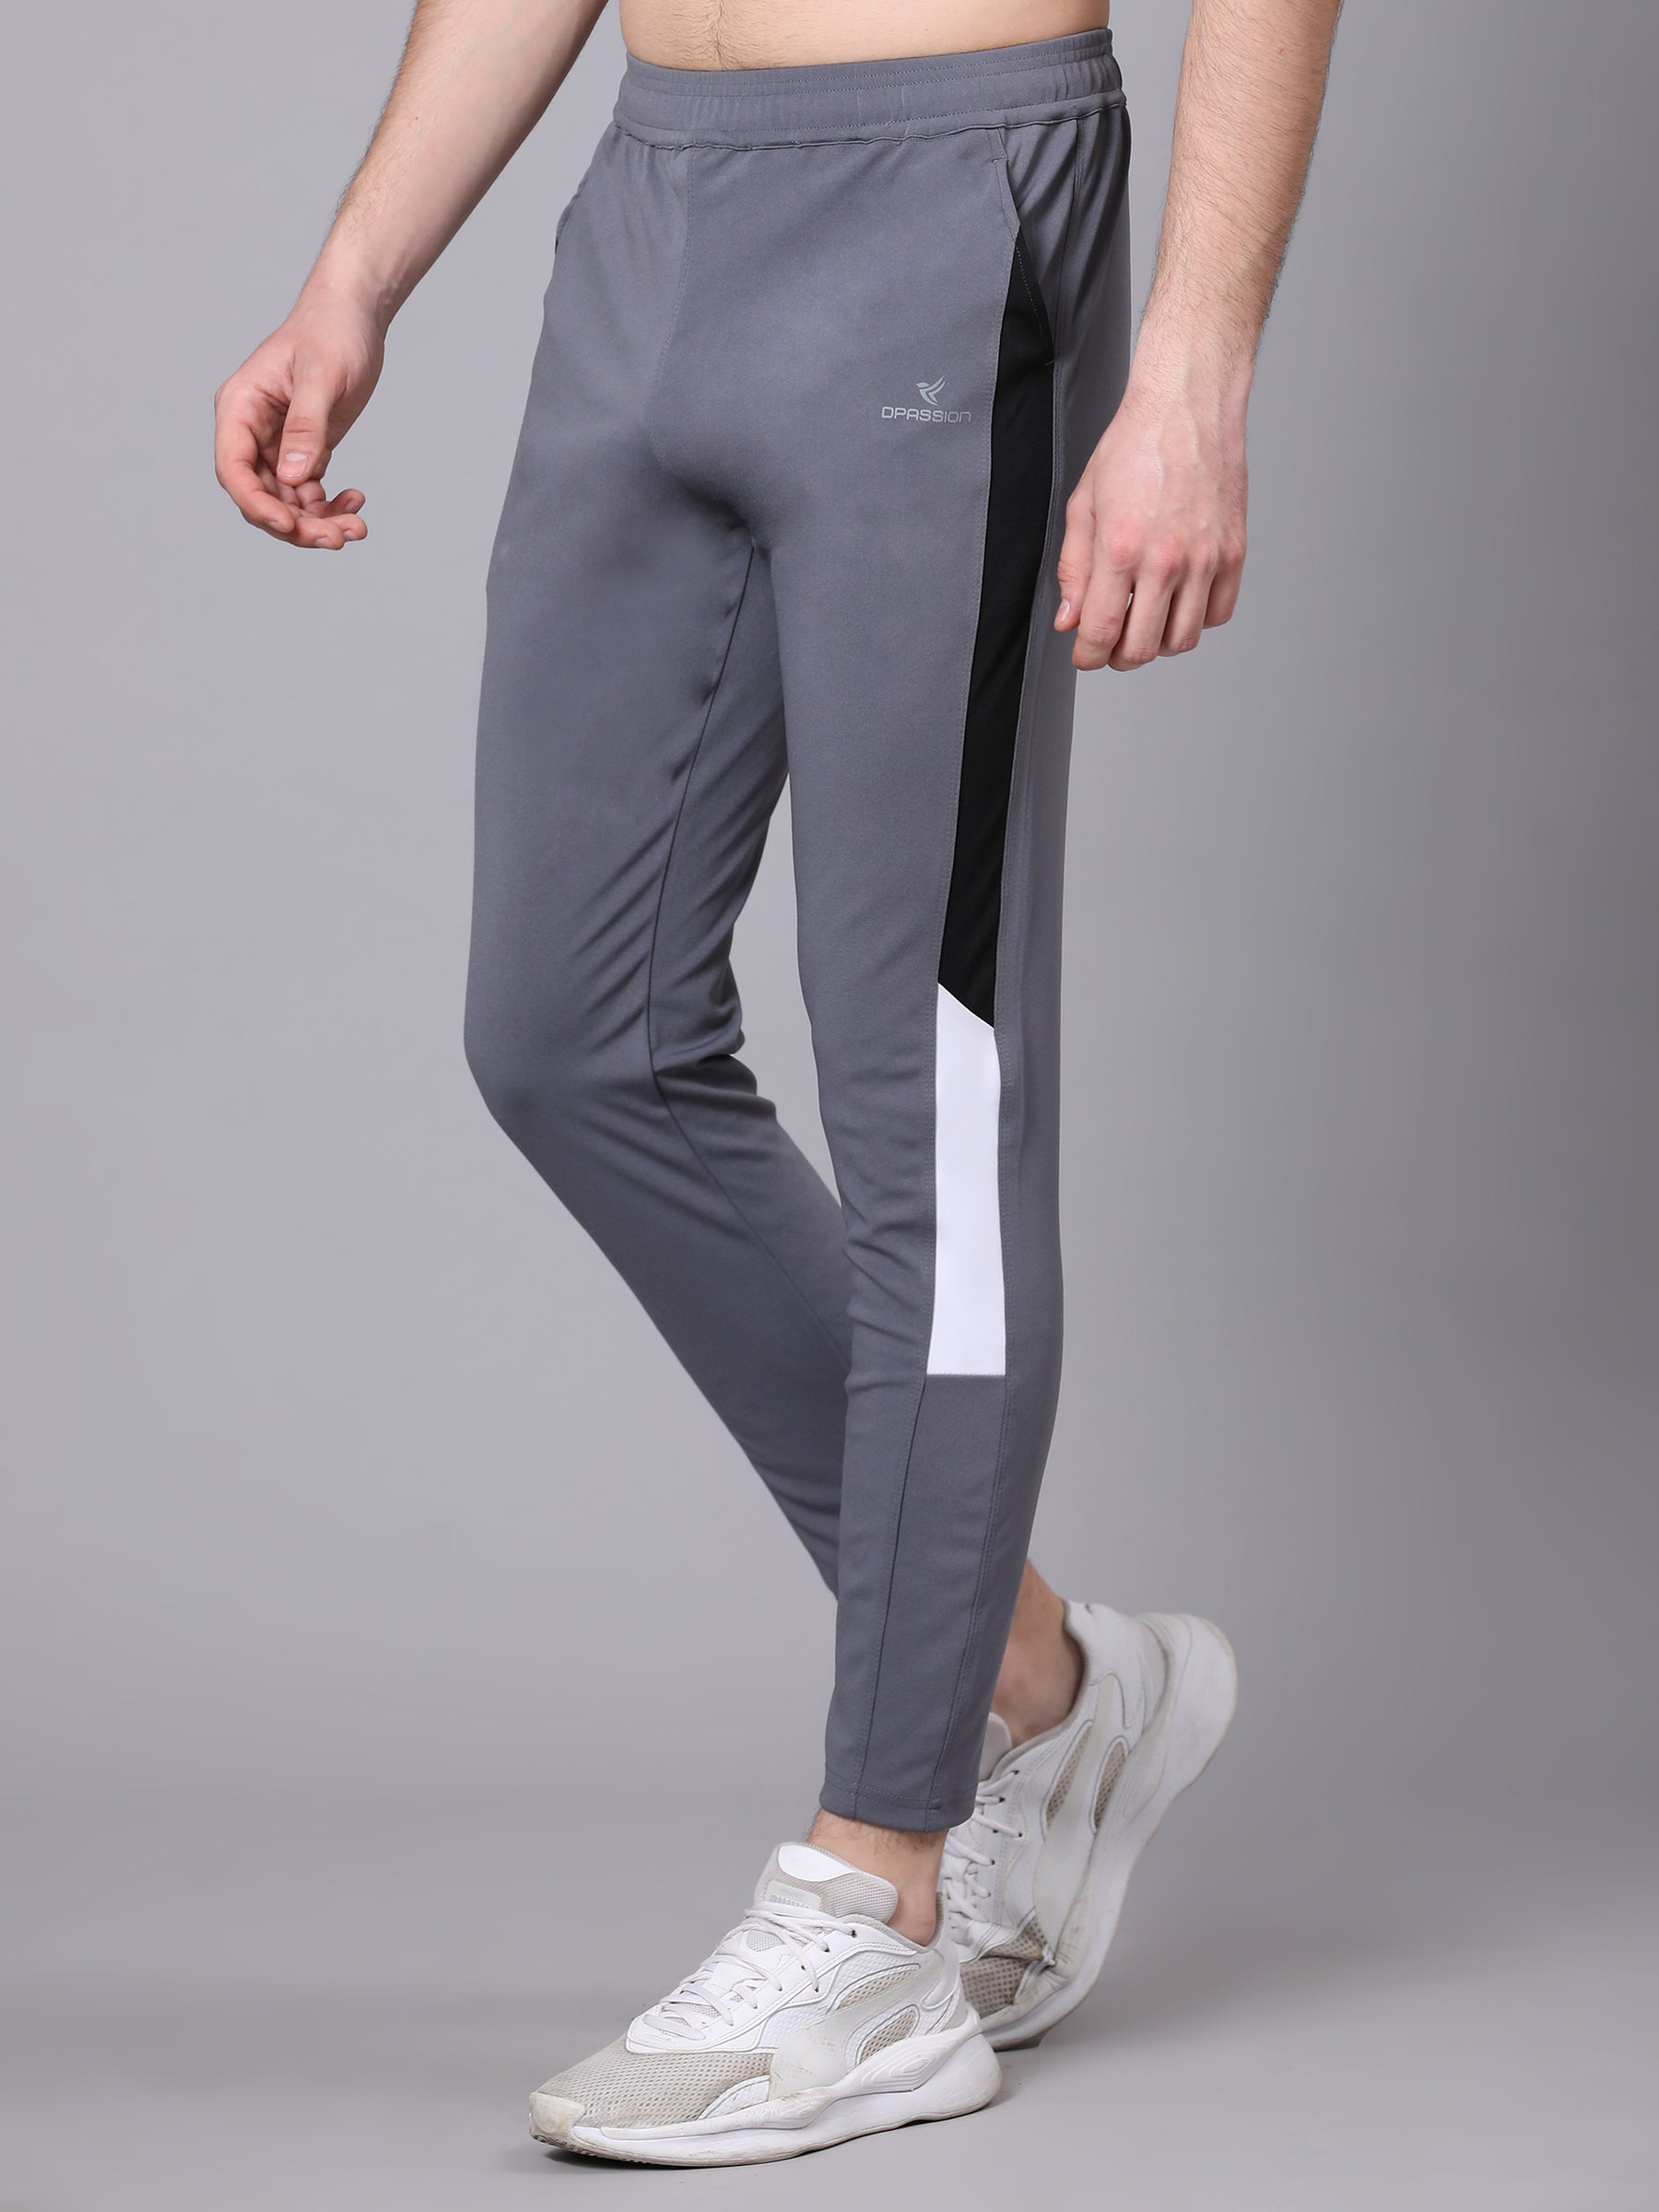 Lycra Printed Slim Fit Mens Track Pant  Shopaholics